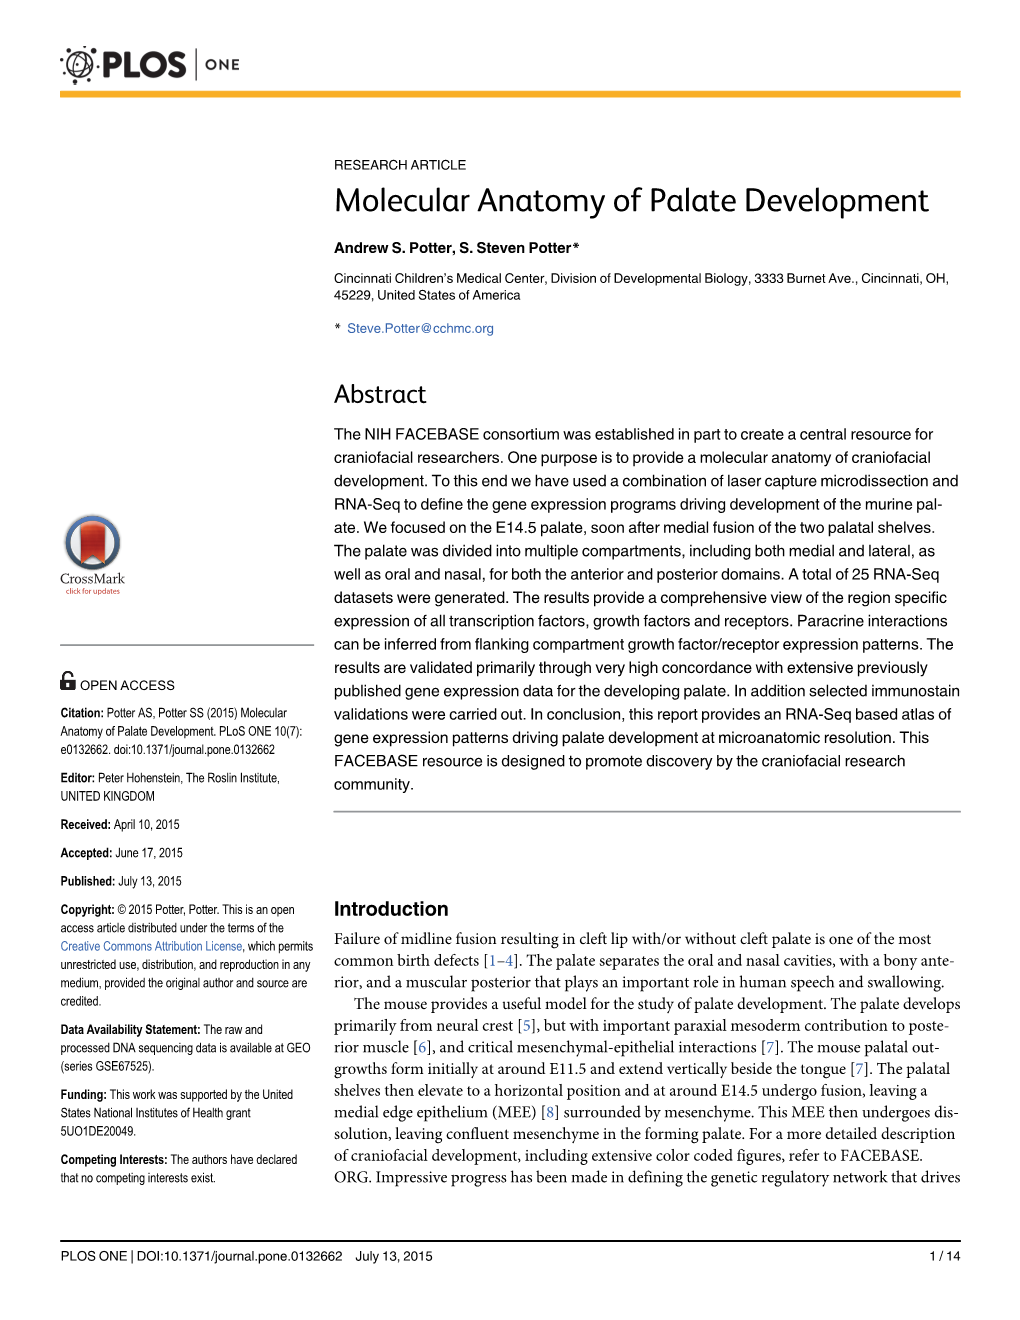 Molecular Anatomy of Palate Development